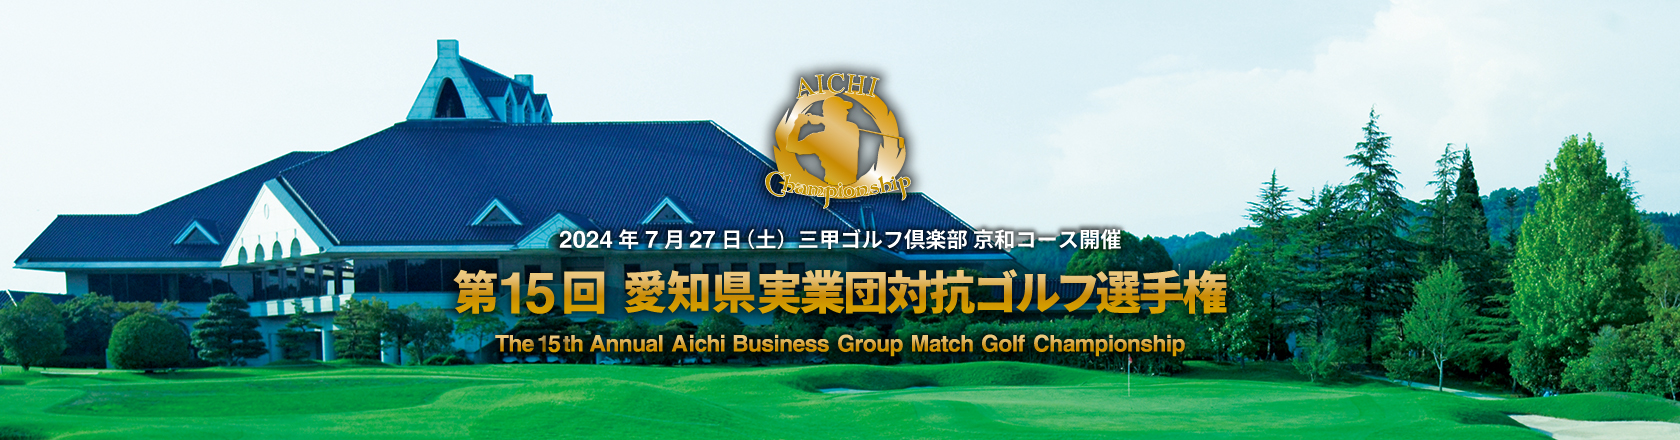 第13回 愛知県実業団対抗ゴルフ選手権